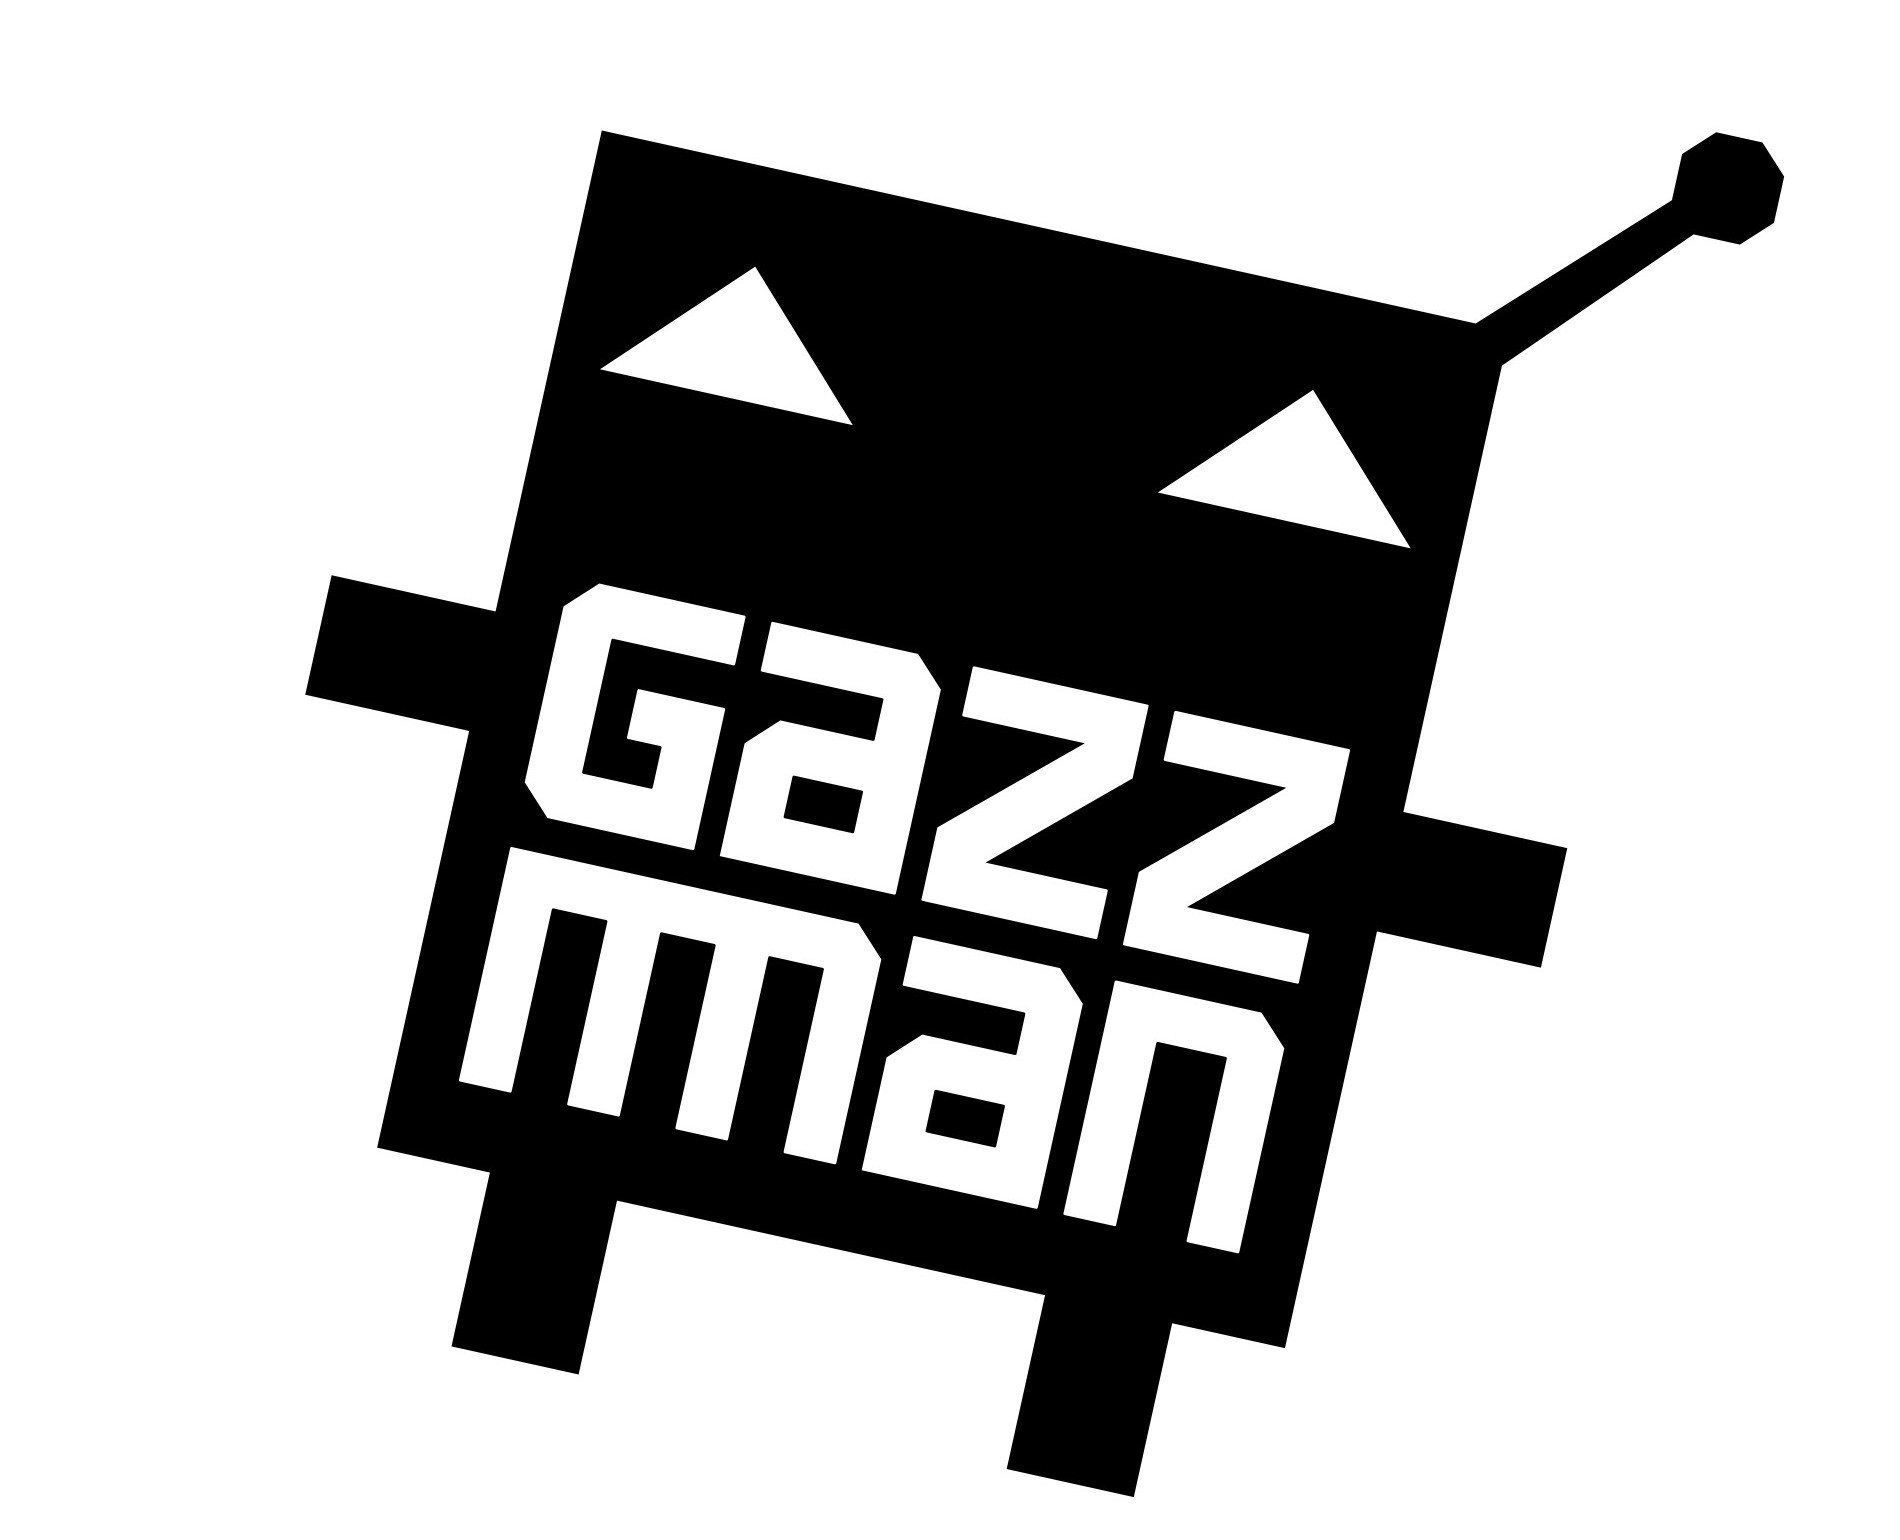 Gazzman = Peter te Bos